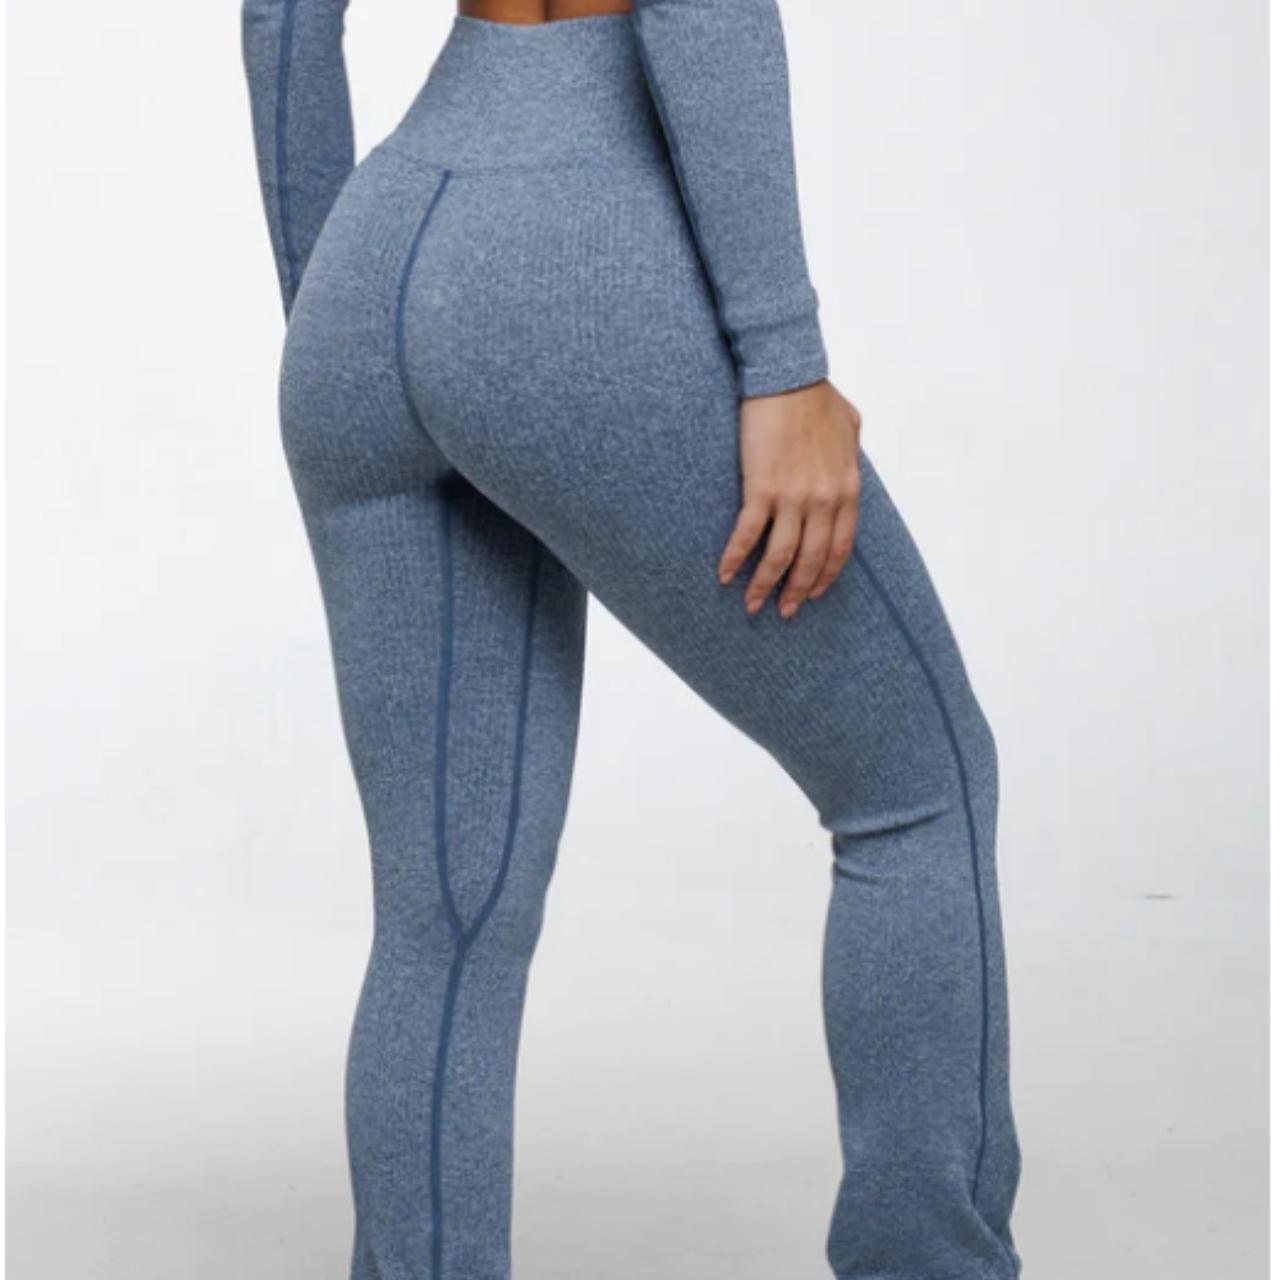 Echt apparel - Comfort flare pants Size: Medium - Depop